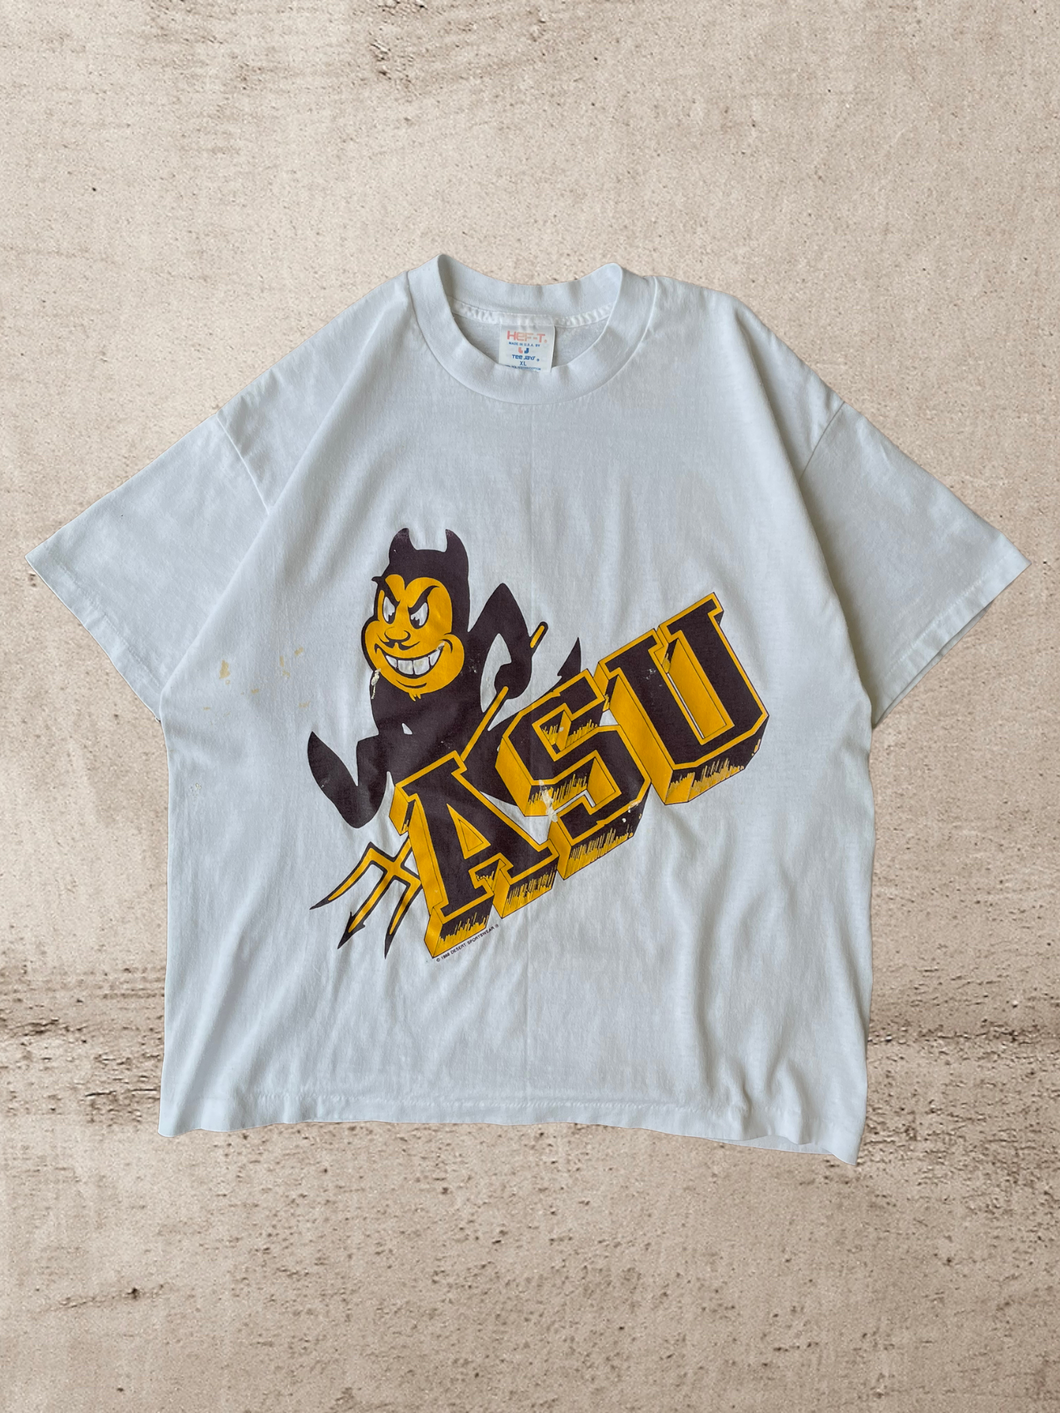 90s Distressed Arizona State University T-Shirt - Large